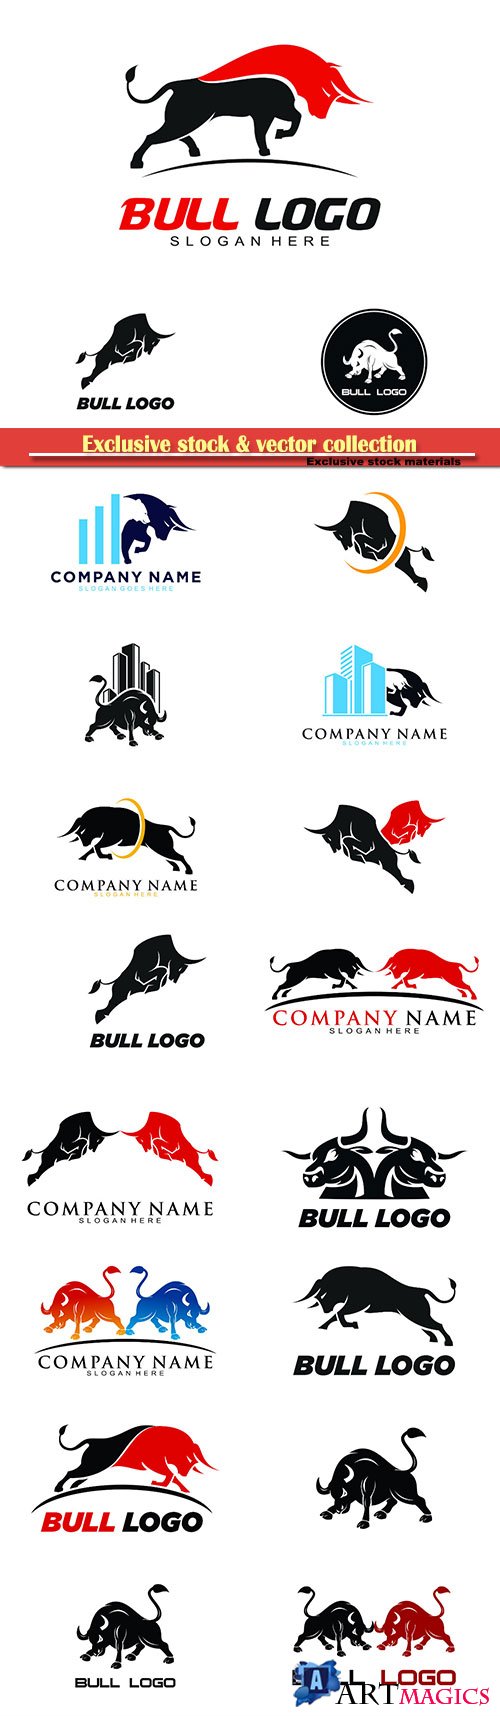 Bull logo vector icon illustration